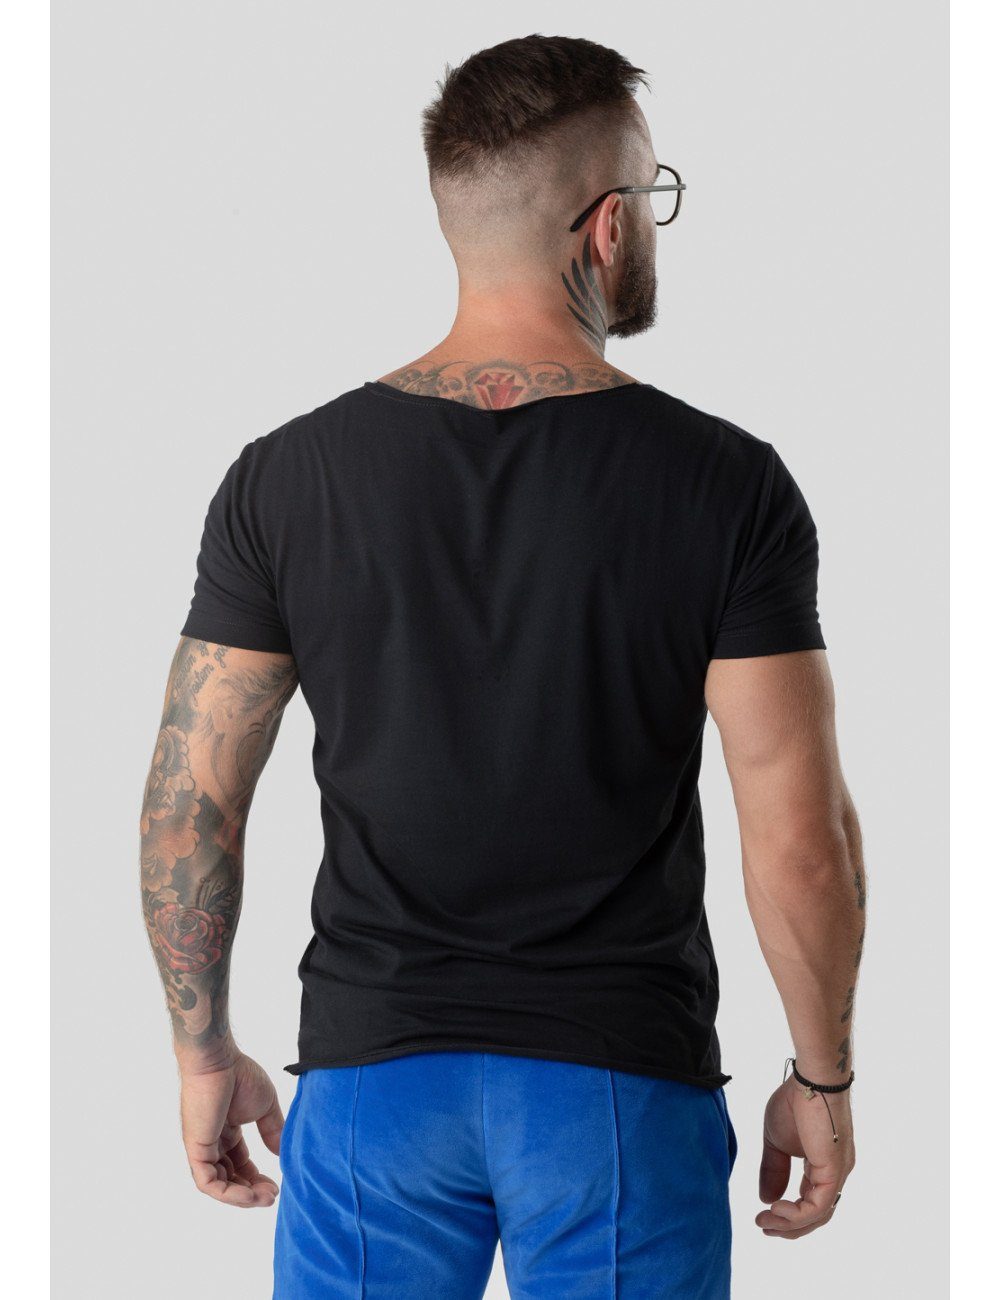 Logostrickerei Trendiges TRES V-Neck Schwarz Shirt T-Shirt mit AMIGOS